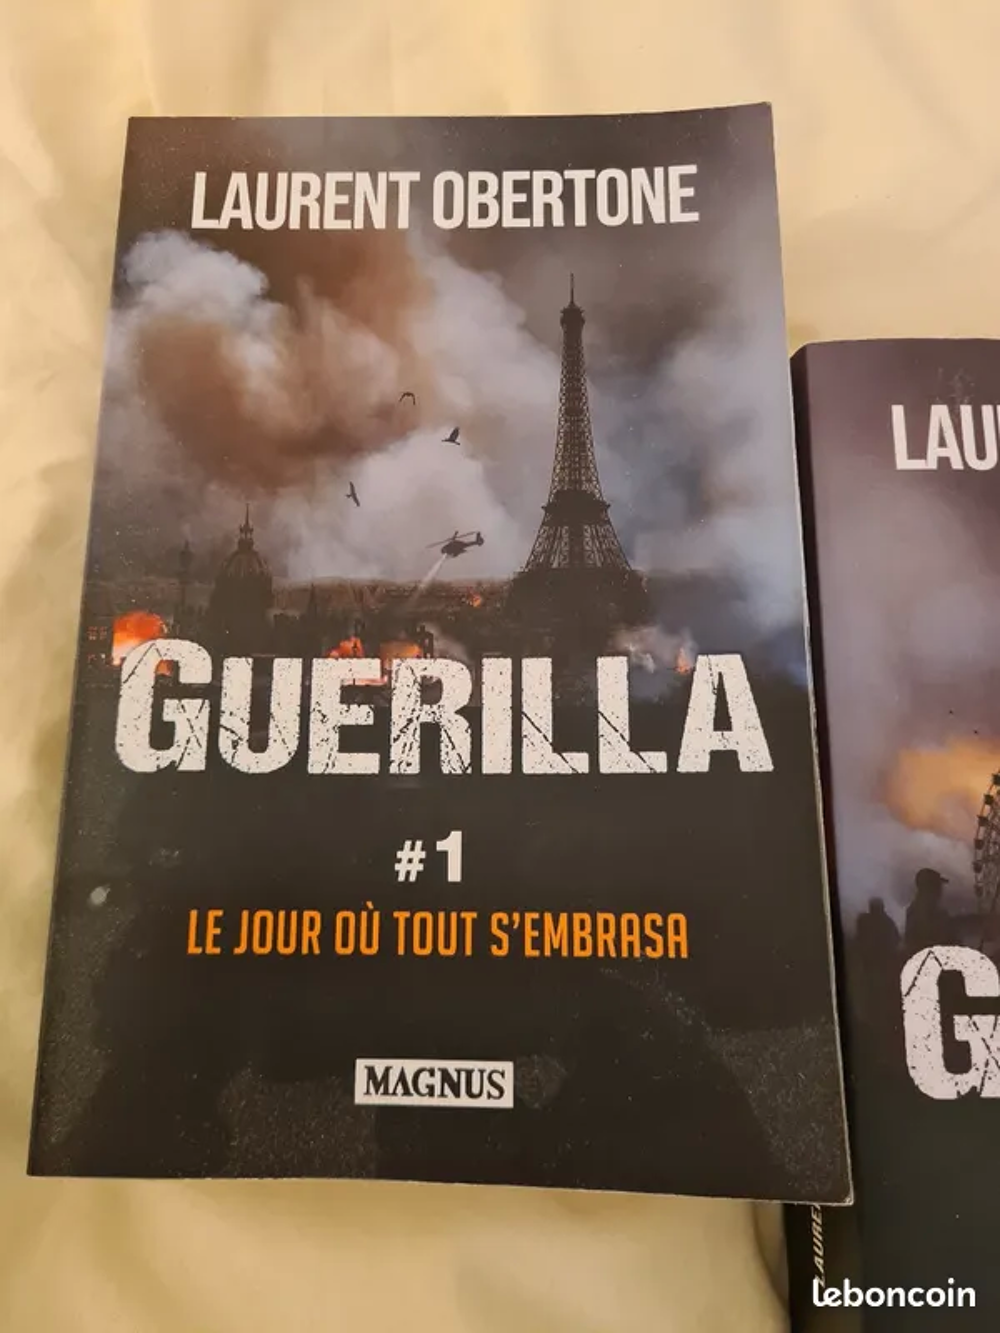 Trilogie GERILLA de Laurent Obertone Livres et BD